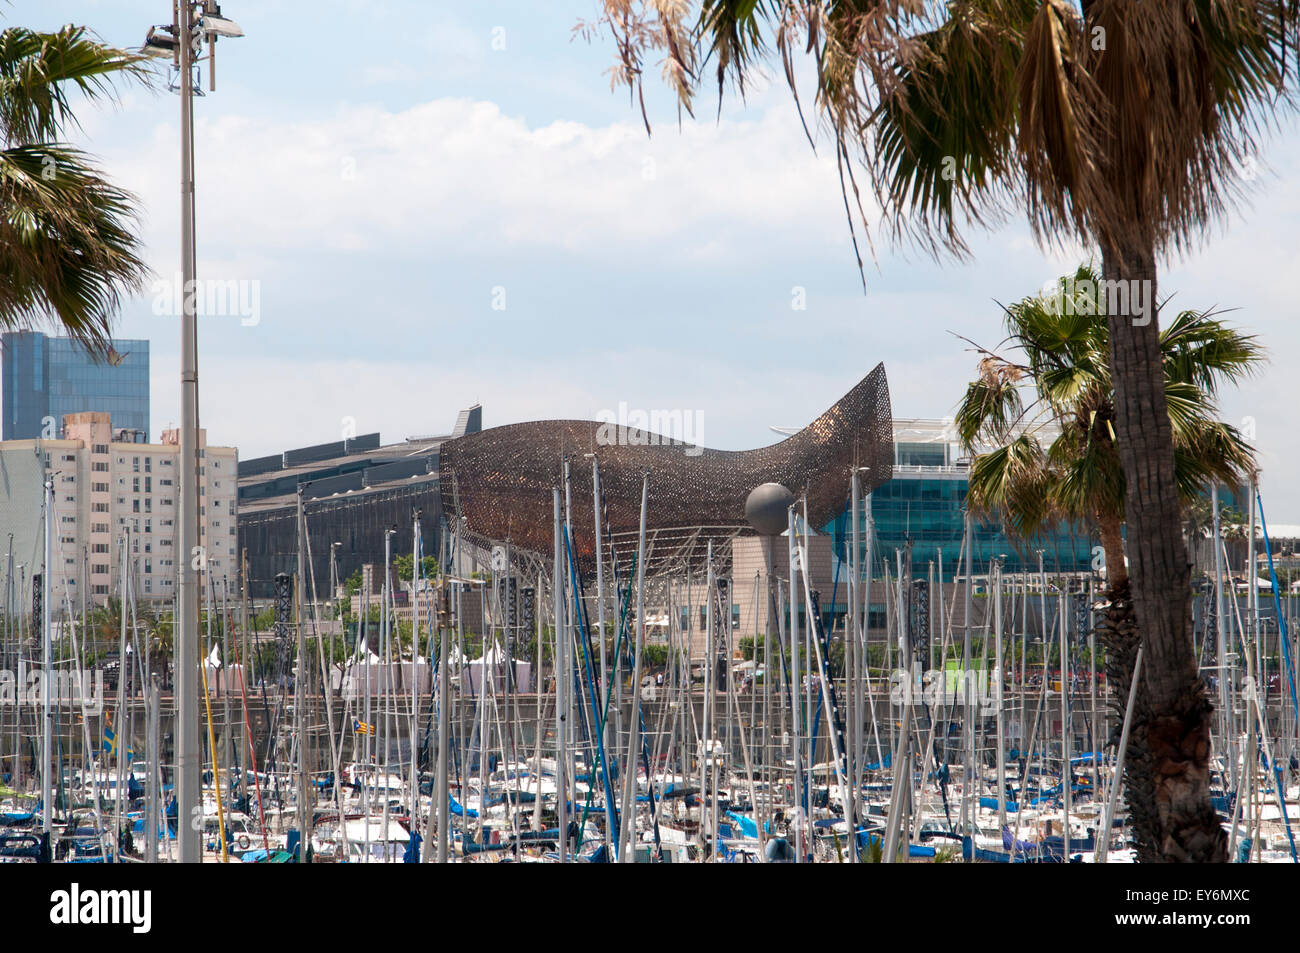 Peix d' Or, Port Olimpic, Barcelona Stock Photo